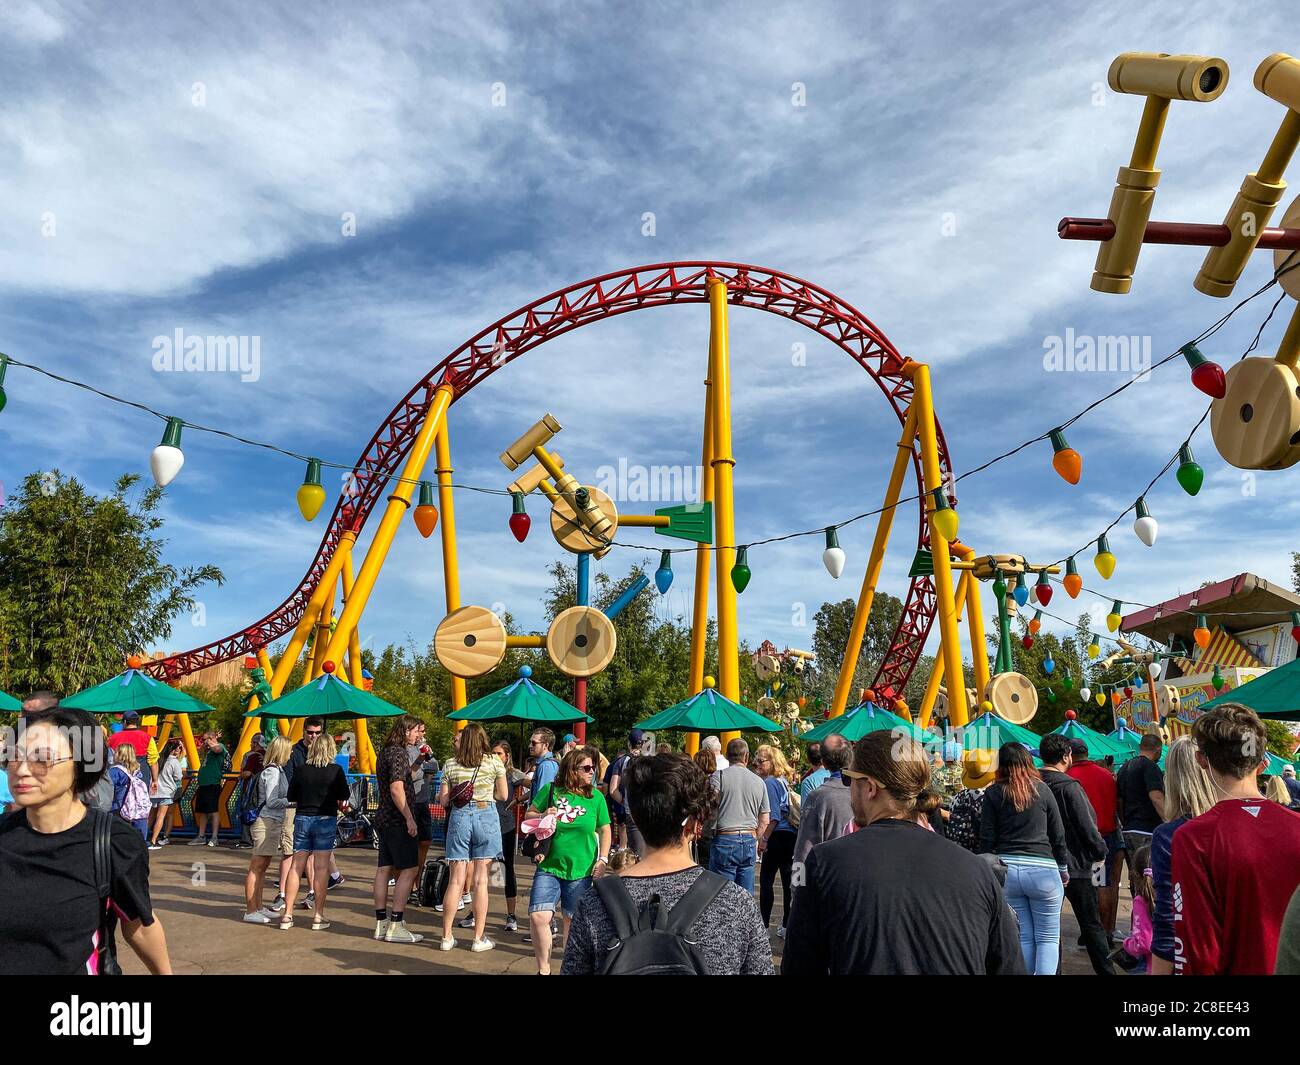 Orlando,FL/USA-11/27/19: Slinky Dog Dash rollercoaster ride at